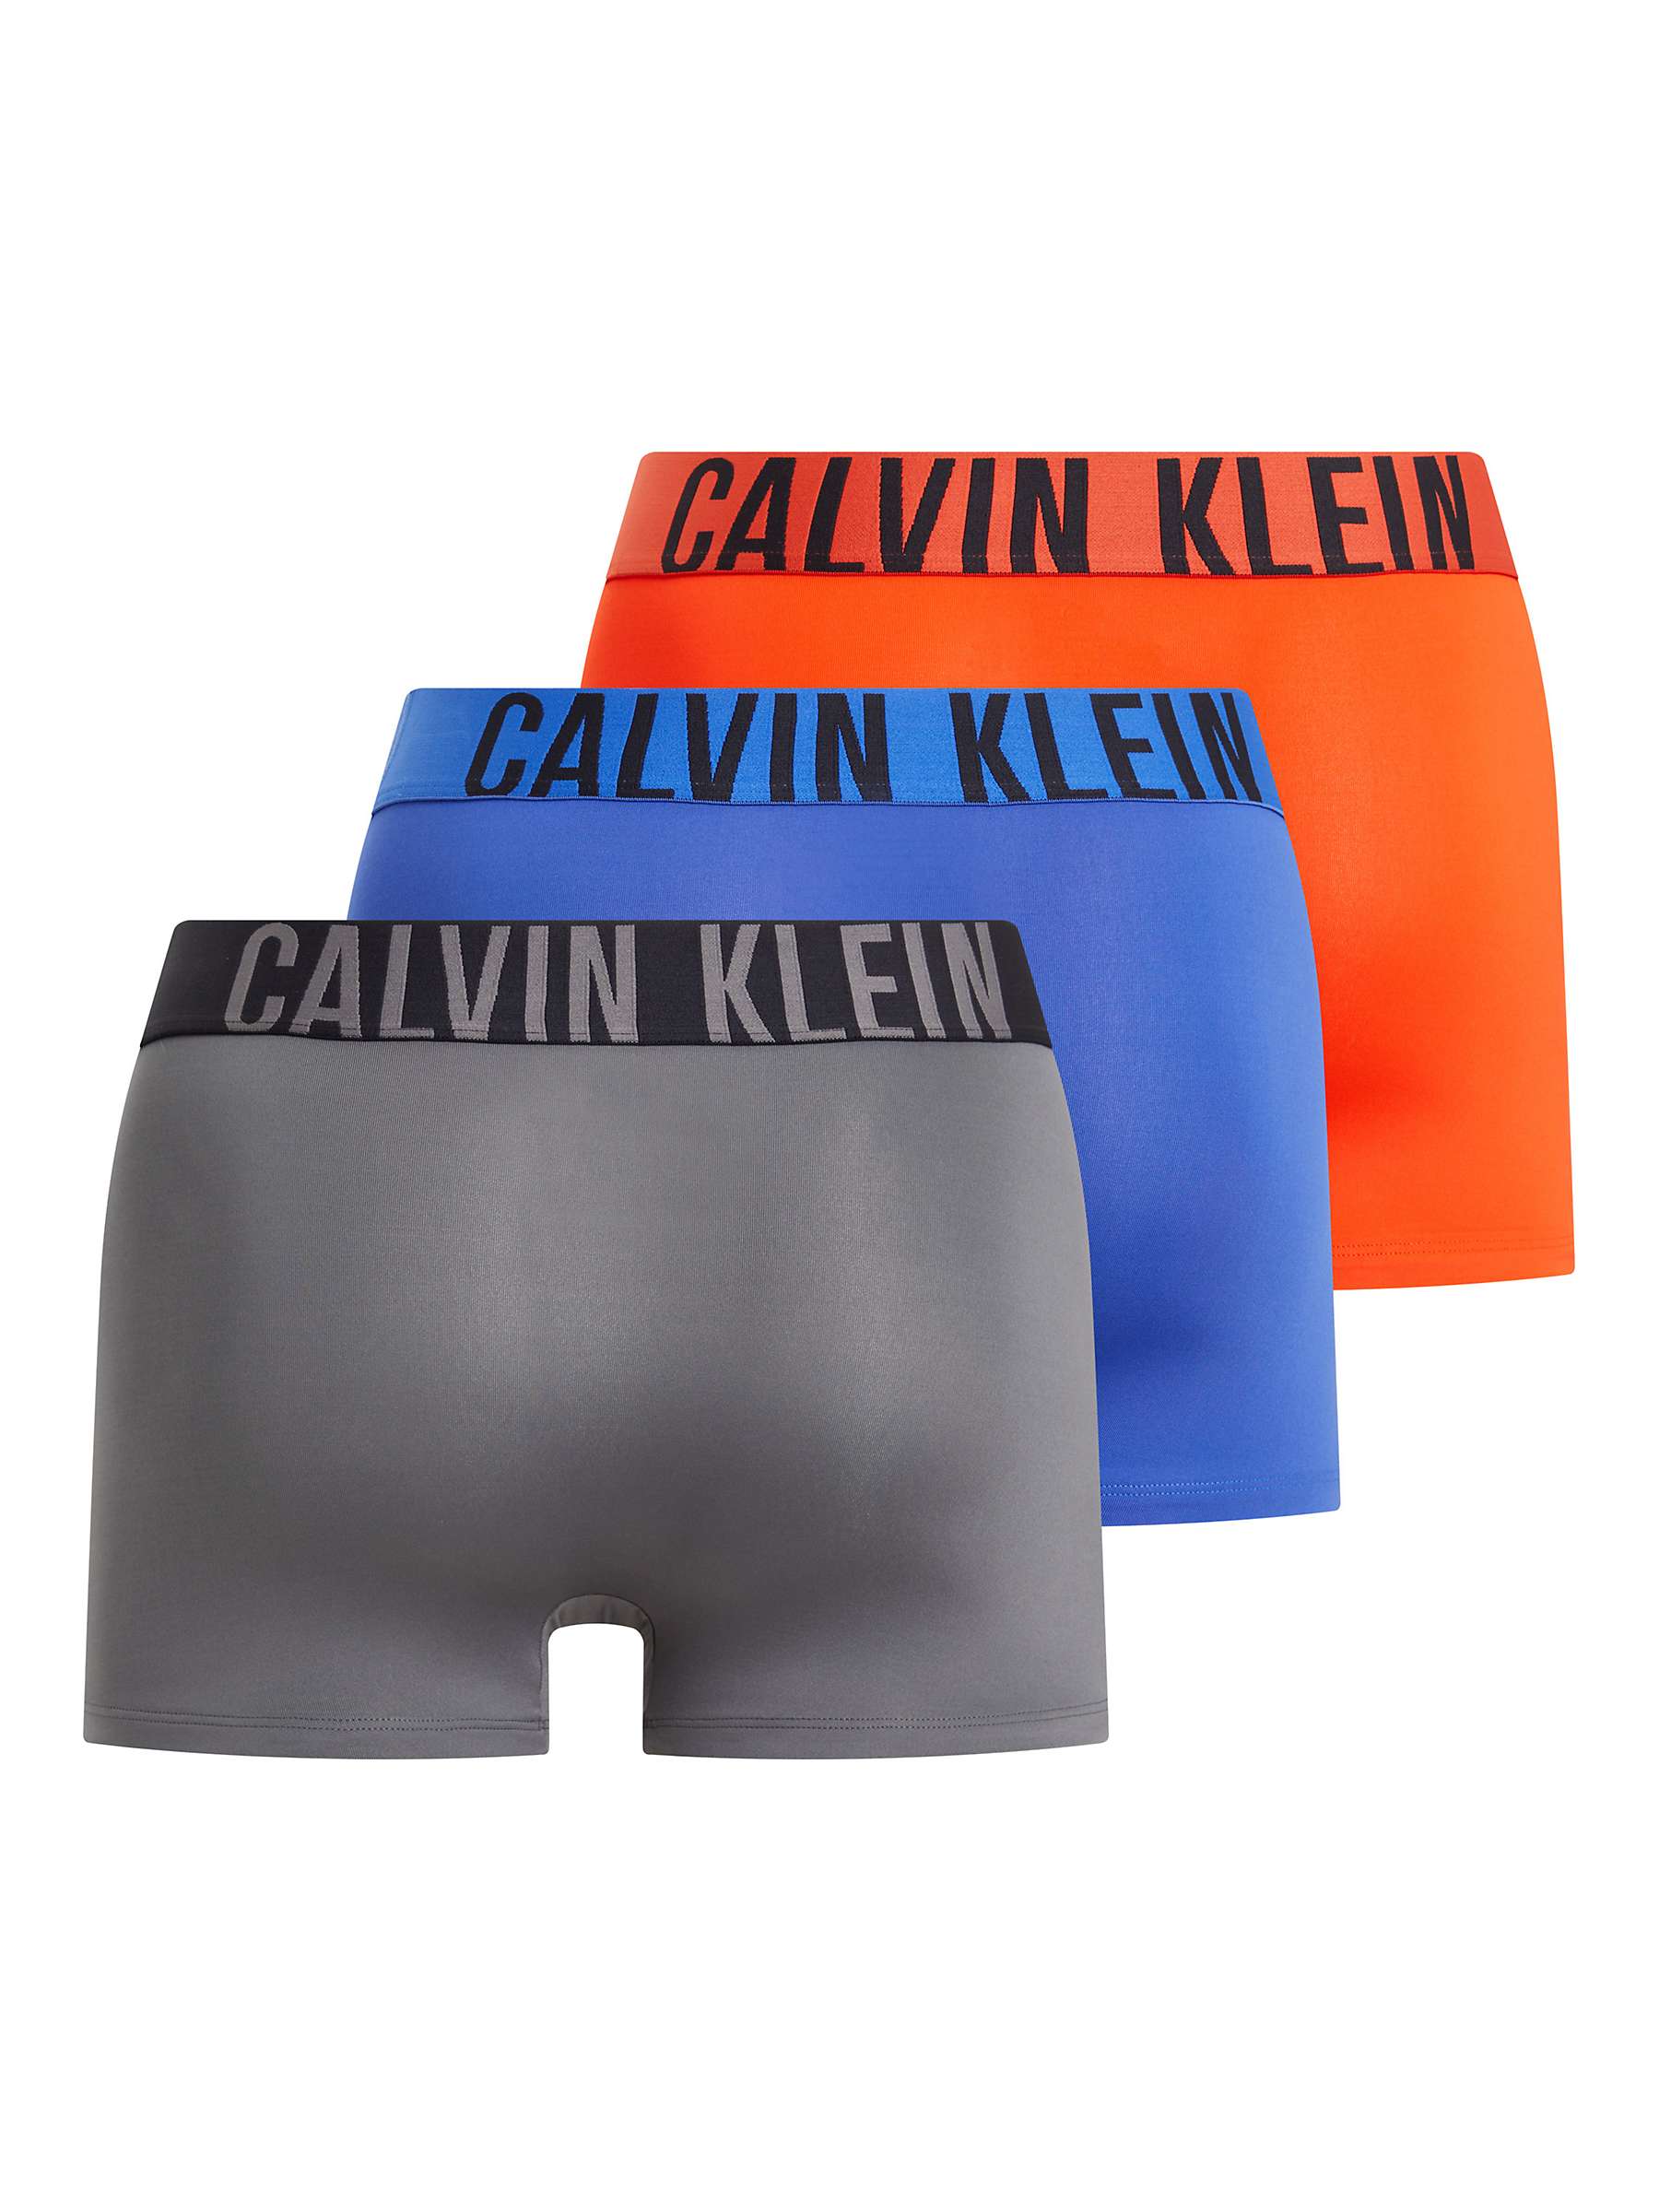 Buy Calvin Klein Classic & Timeless Trunks, Pack of 3, Blue/Grey/Orange Online at johnlewis.com